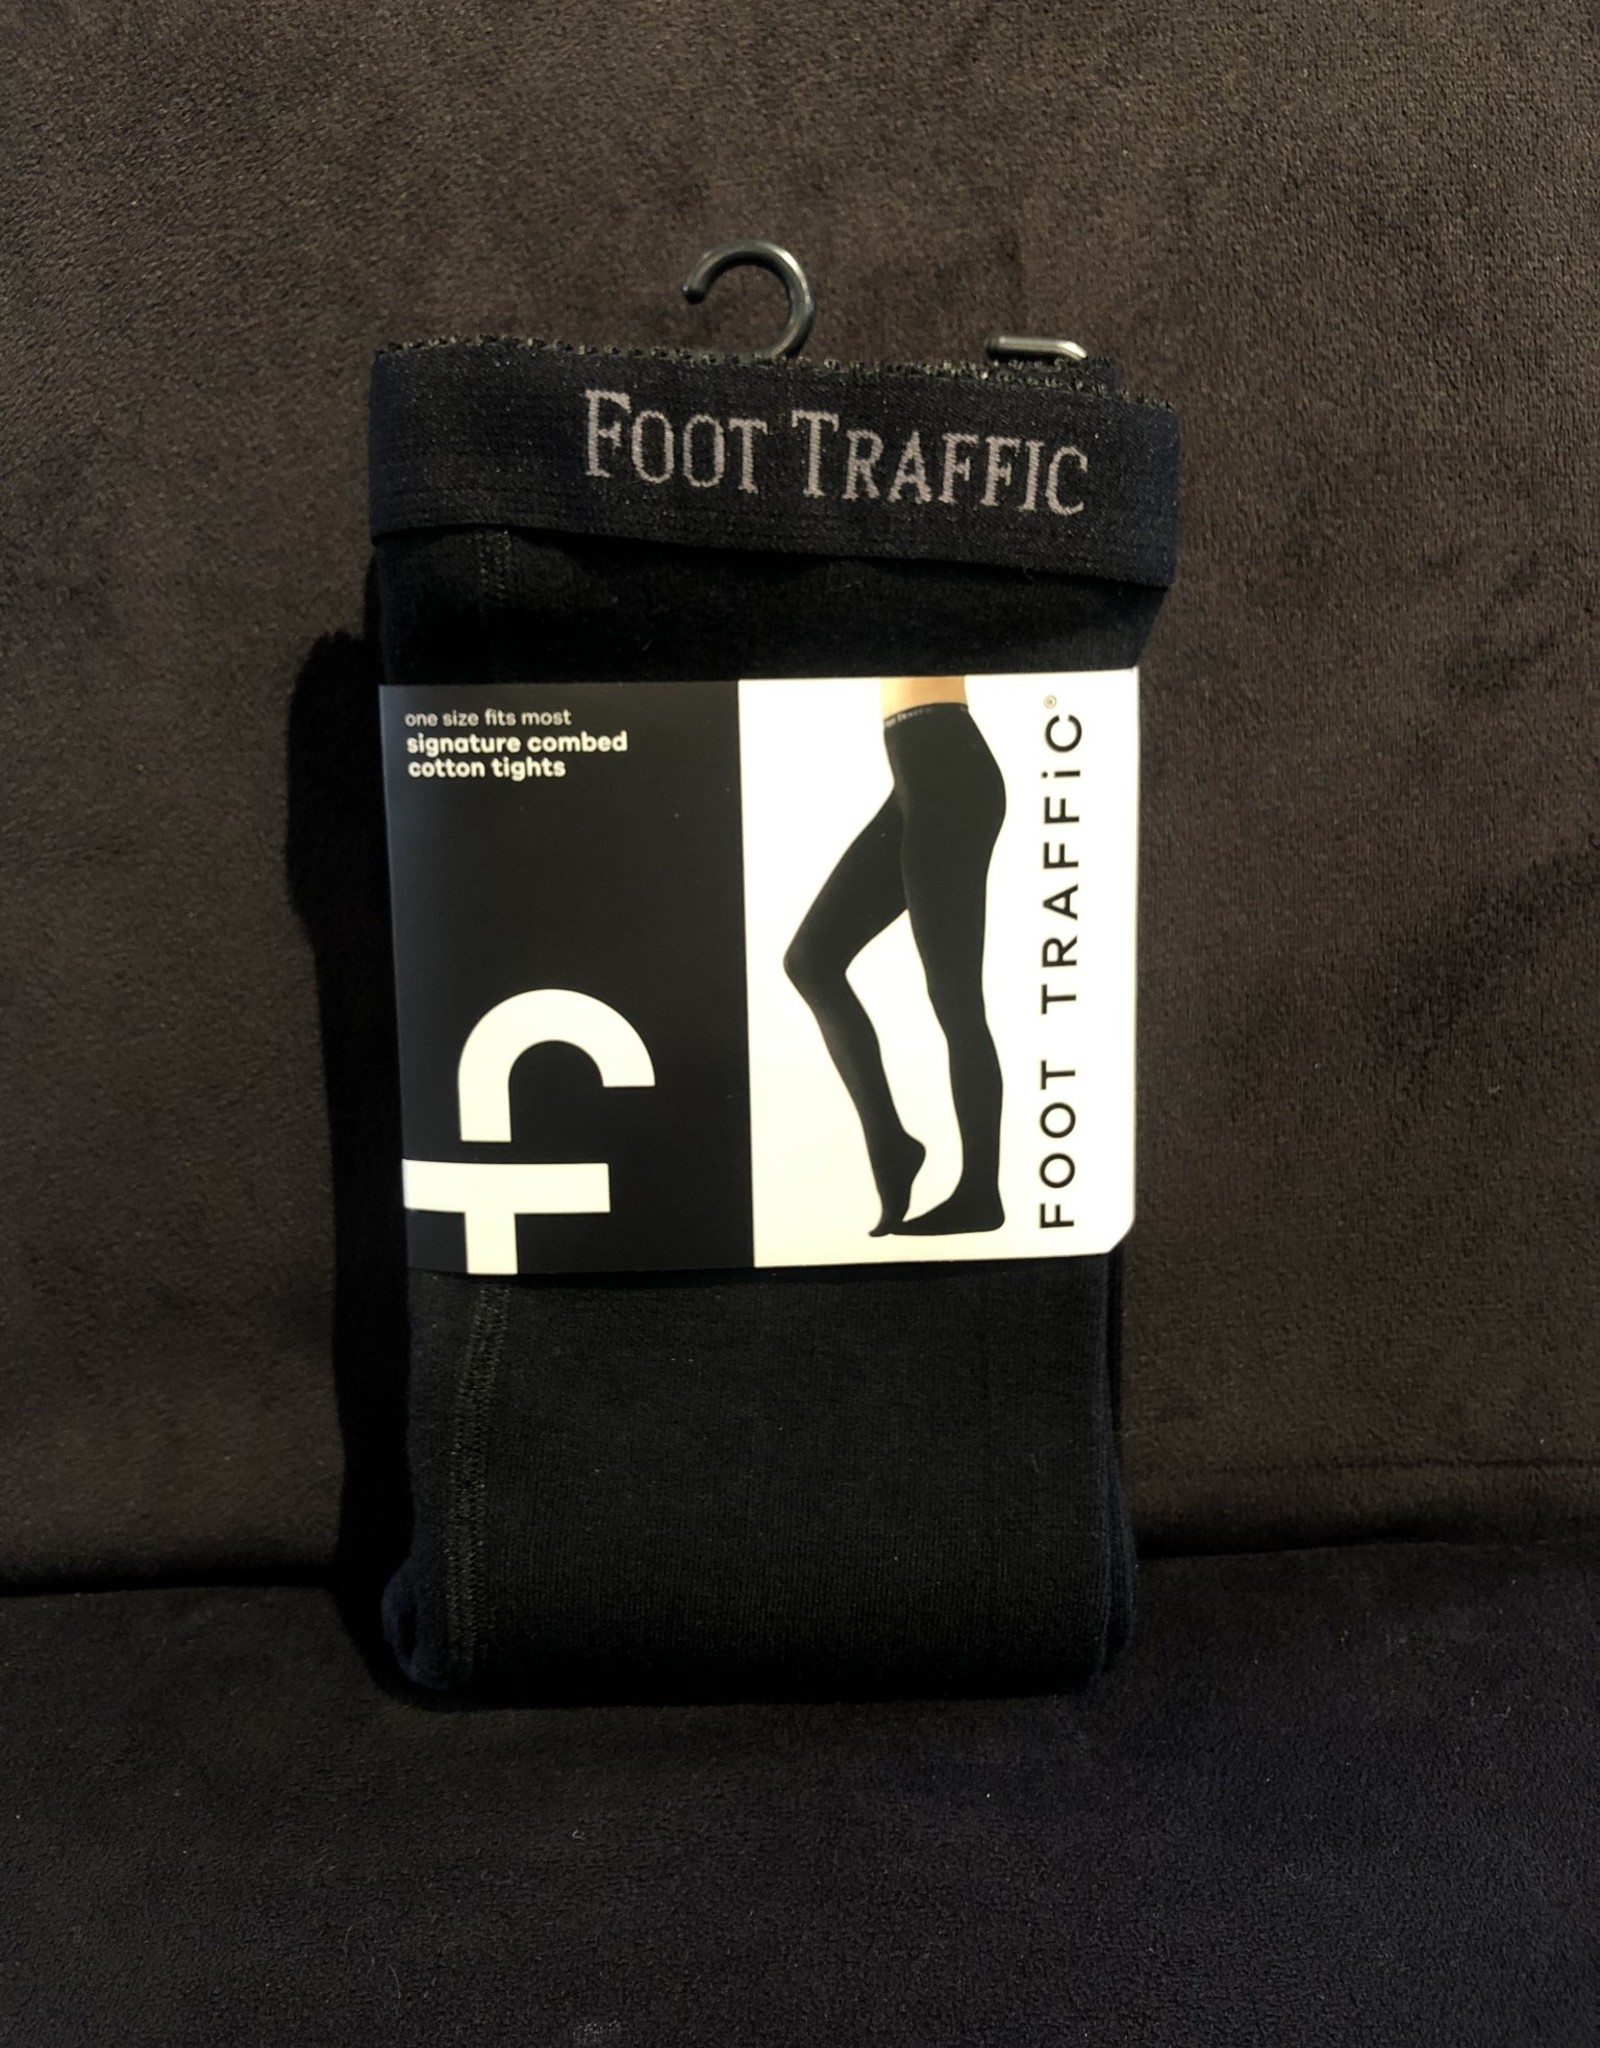 Foot Traffic Foot Traffic - Footed